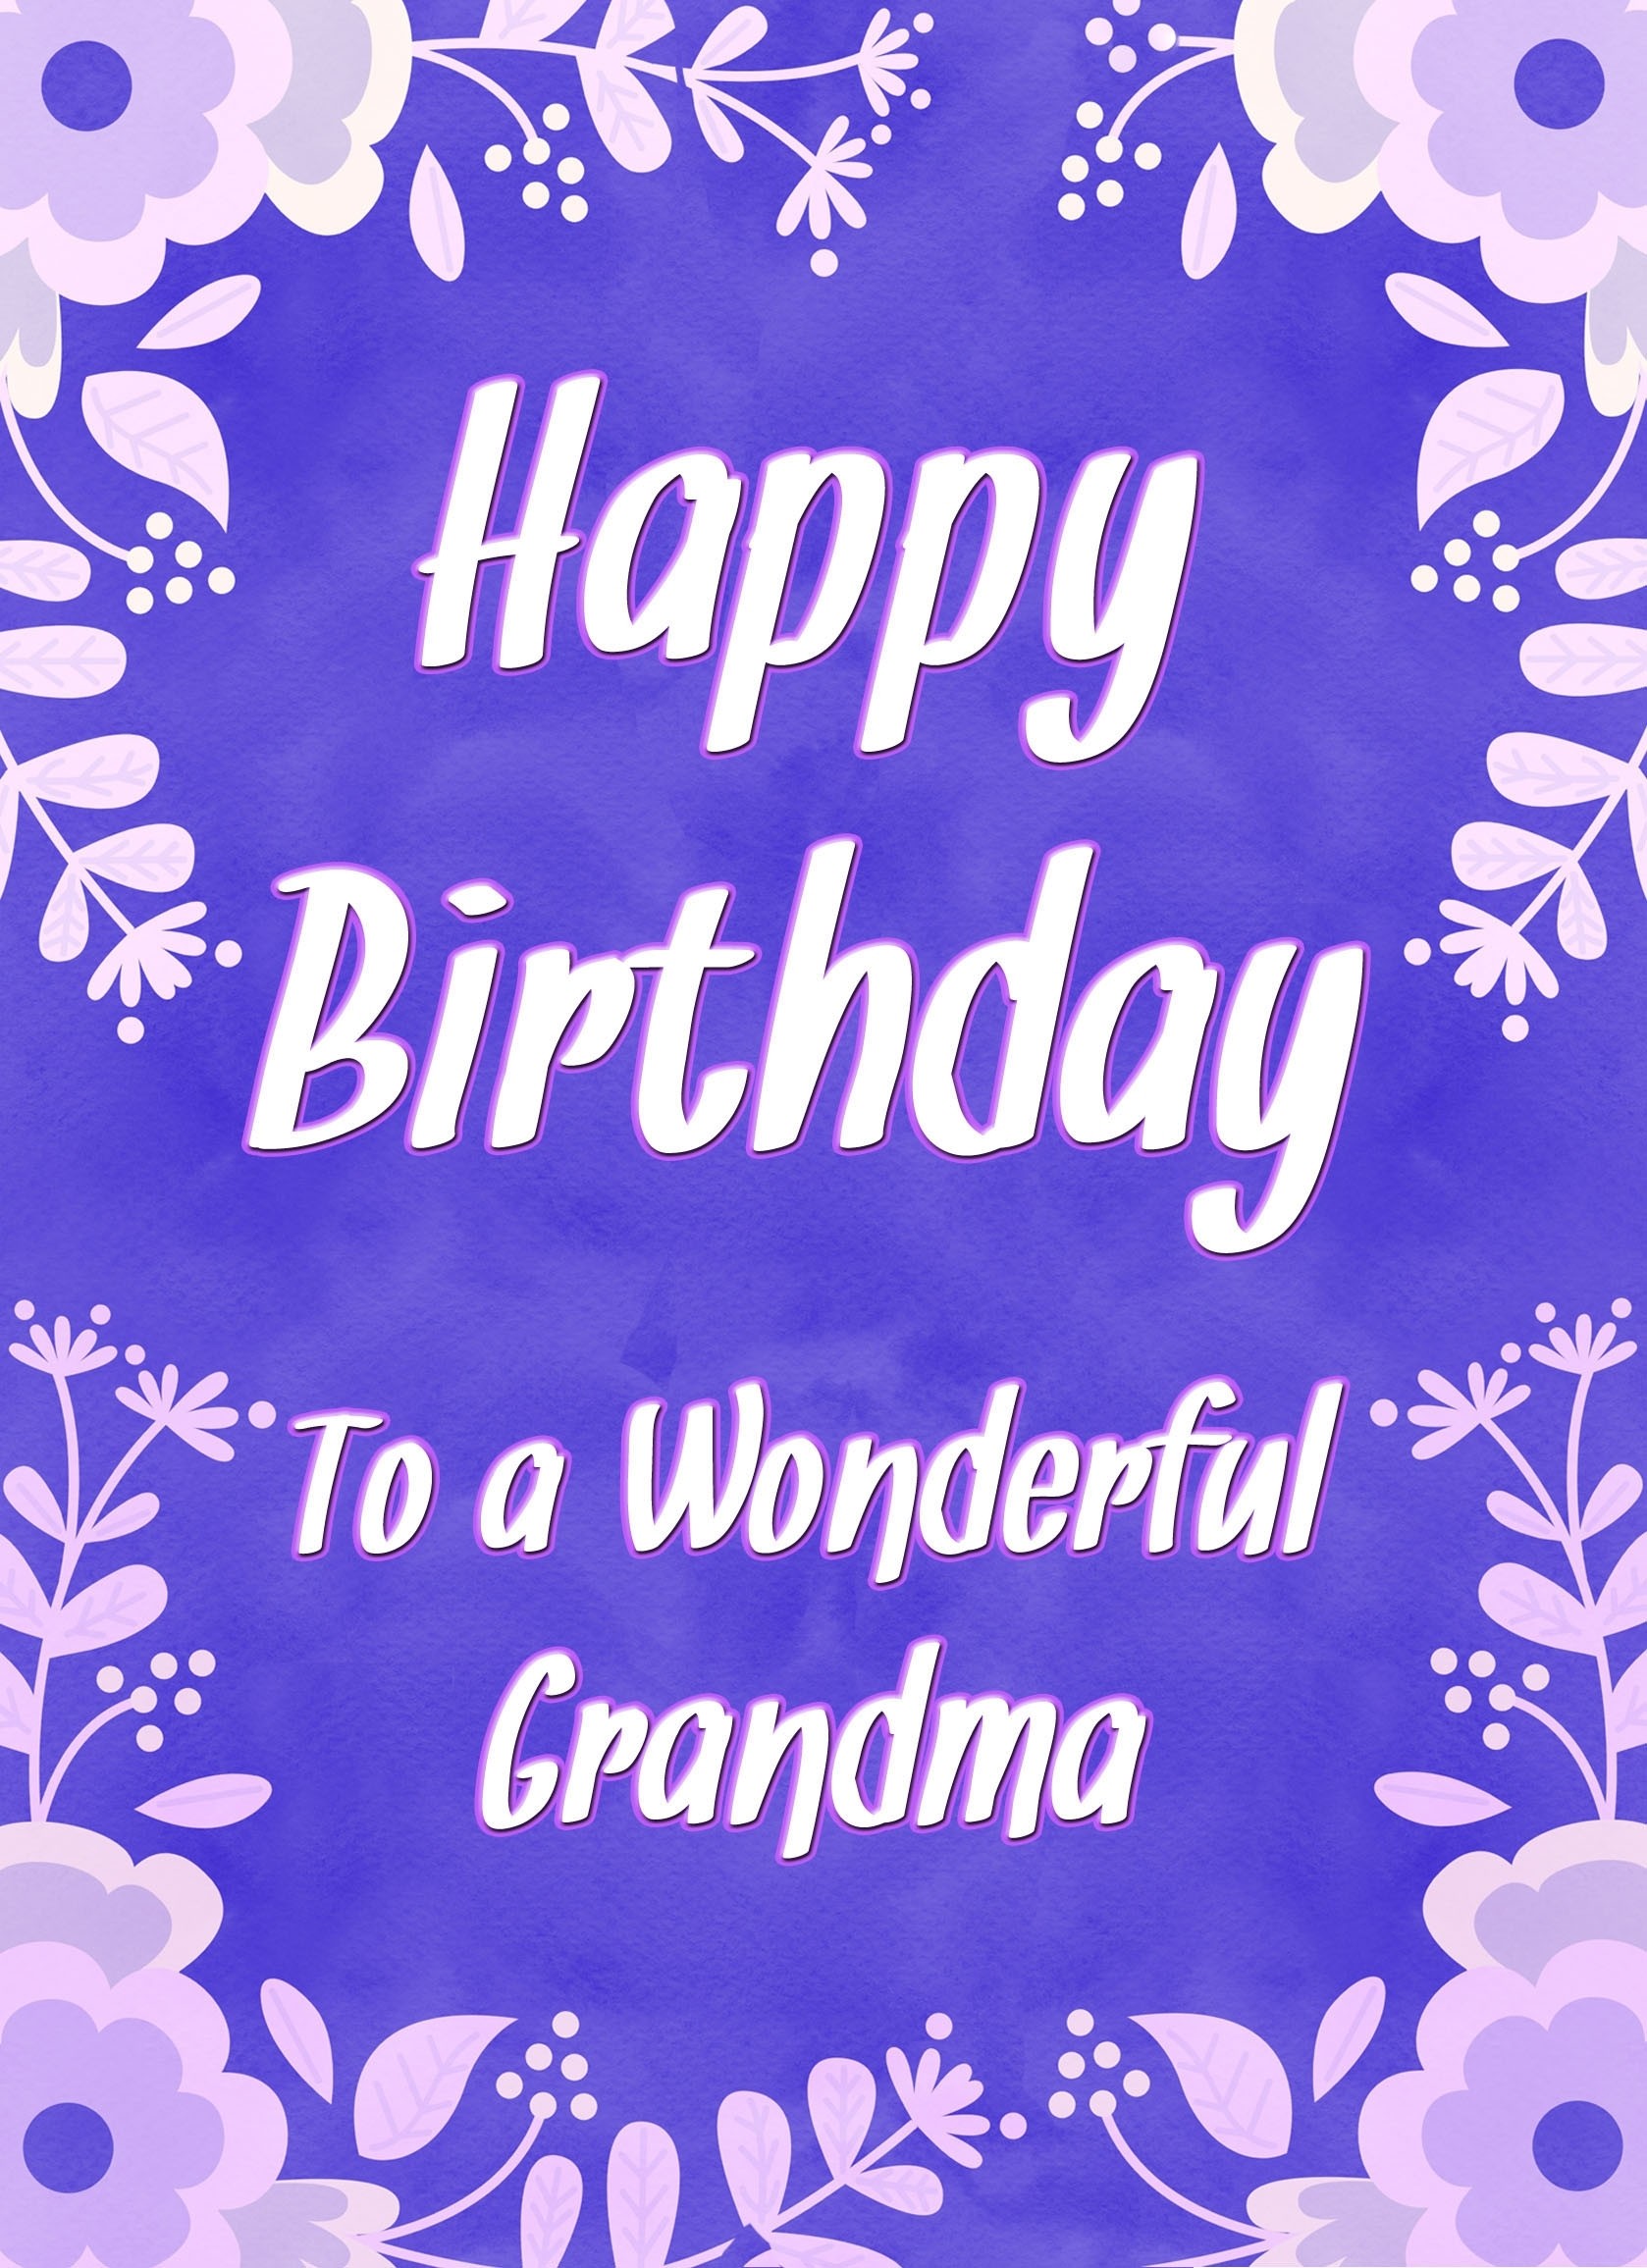 Birthday Card For Wonderful Grandma (Purple Border)